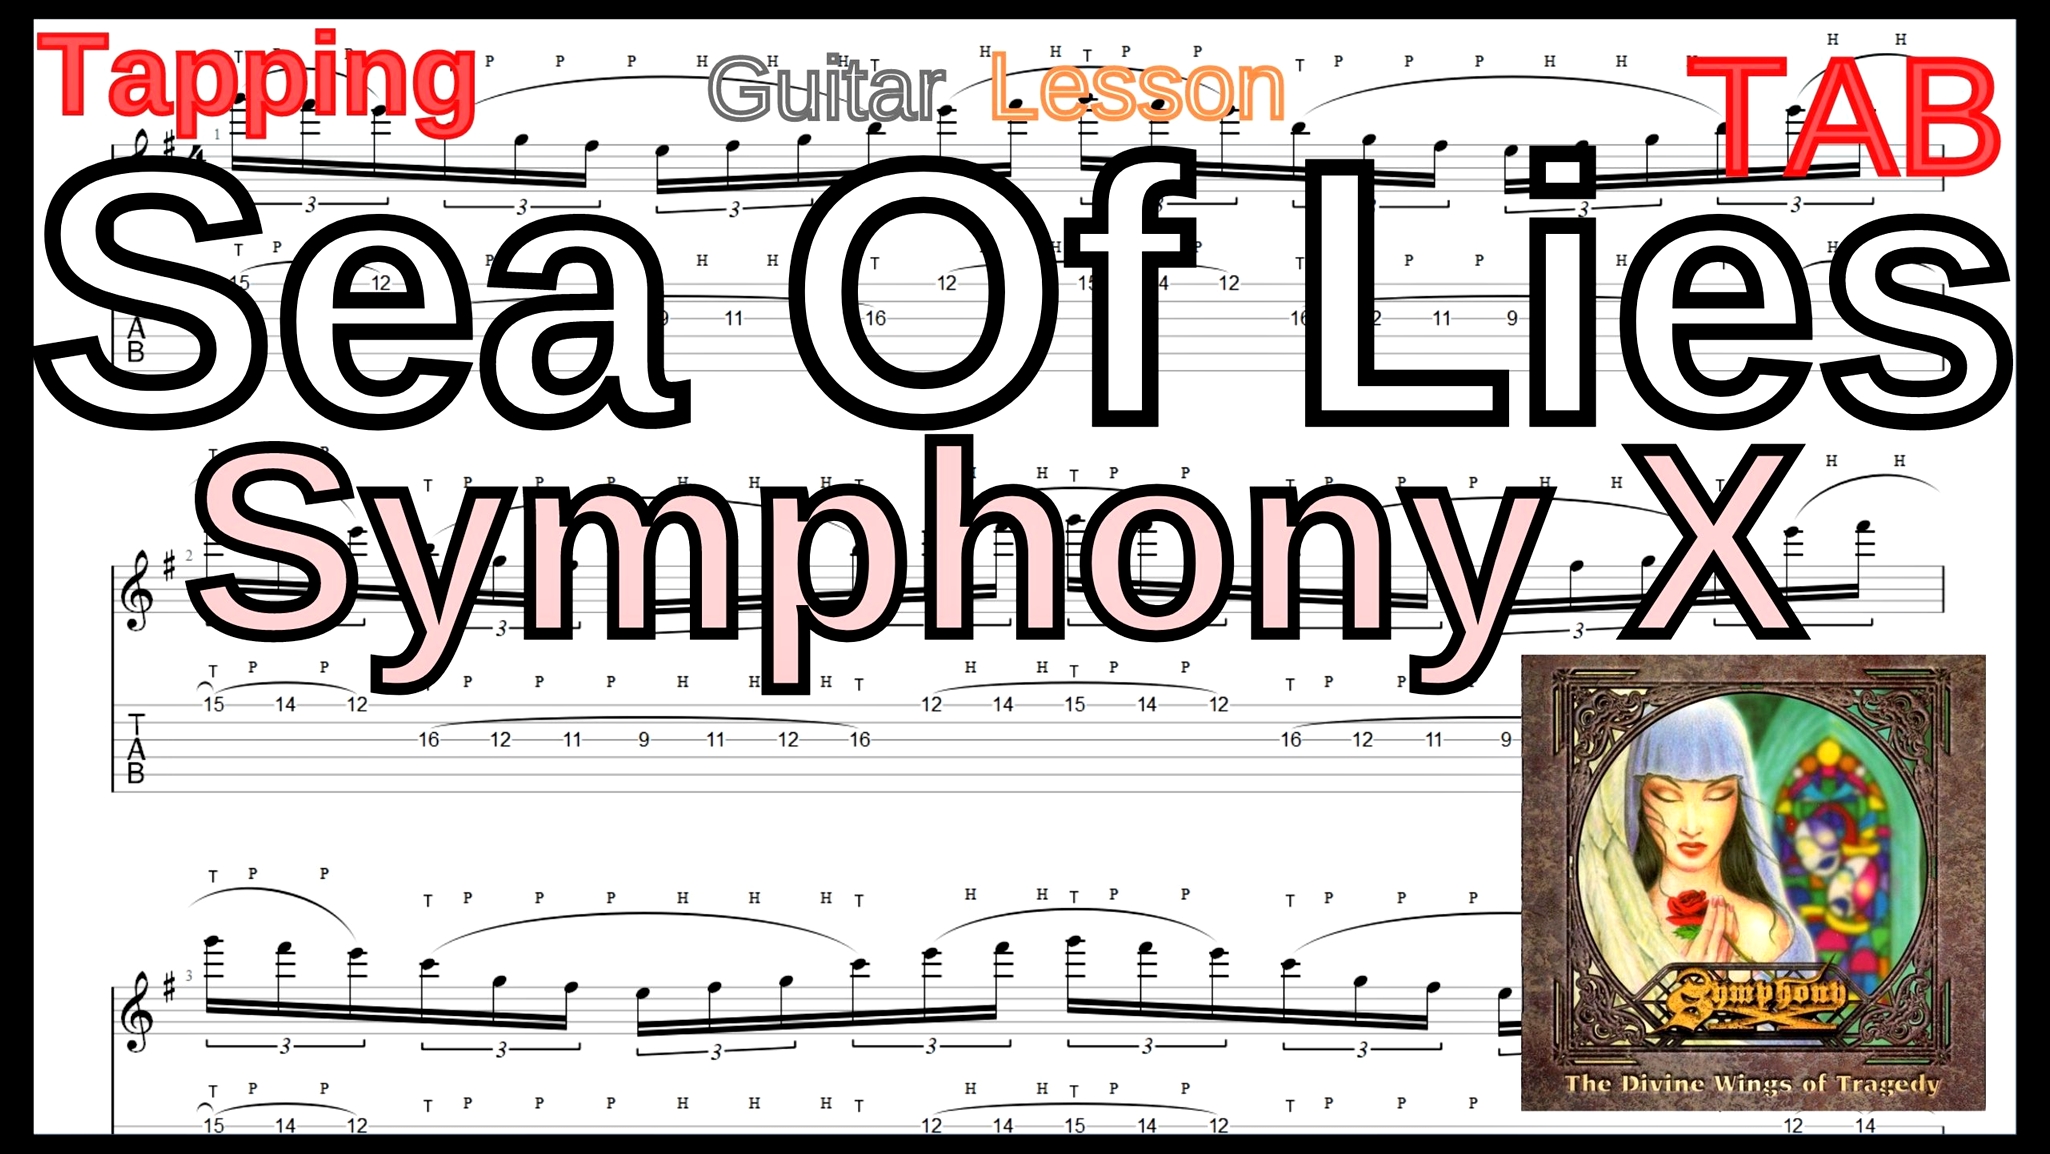 【TAB】Sea Of Lies / Symphony X Tapping Guitar Michael Romeo シンフォニーX マイケルロメオ タッピングギター BPM30-152【Tapping】